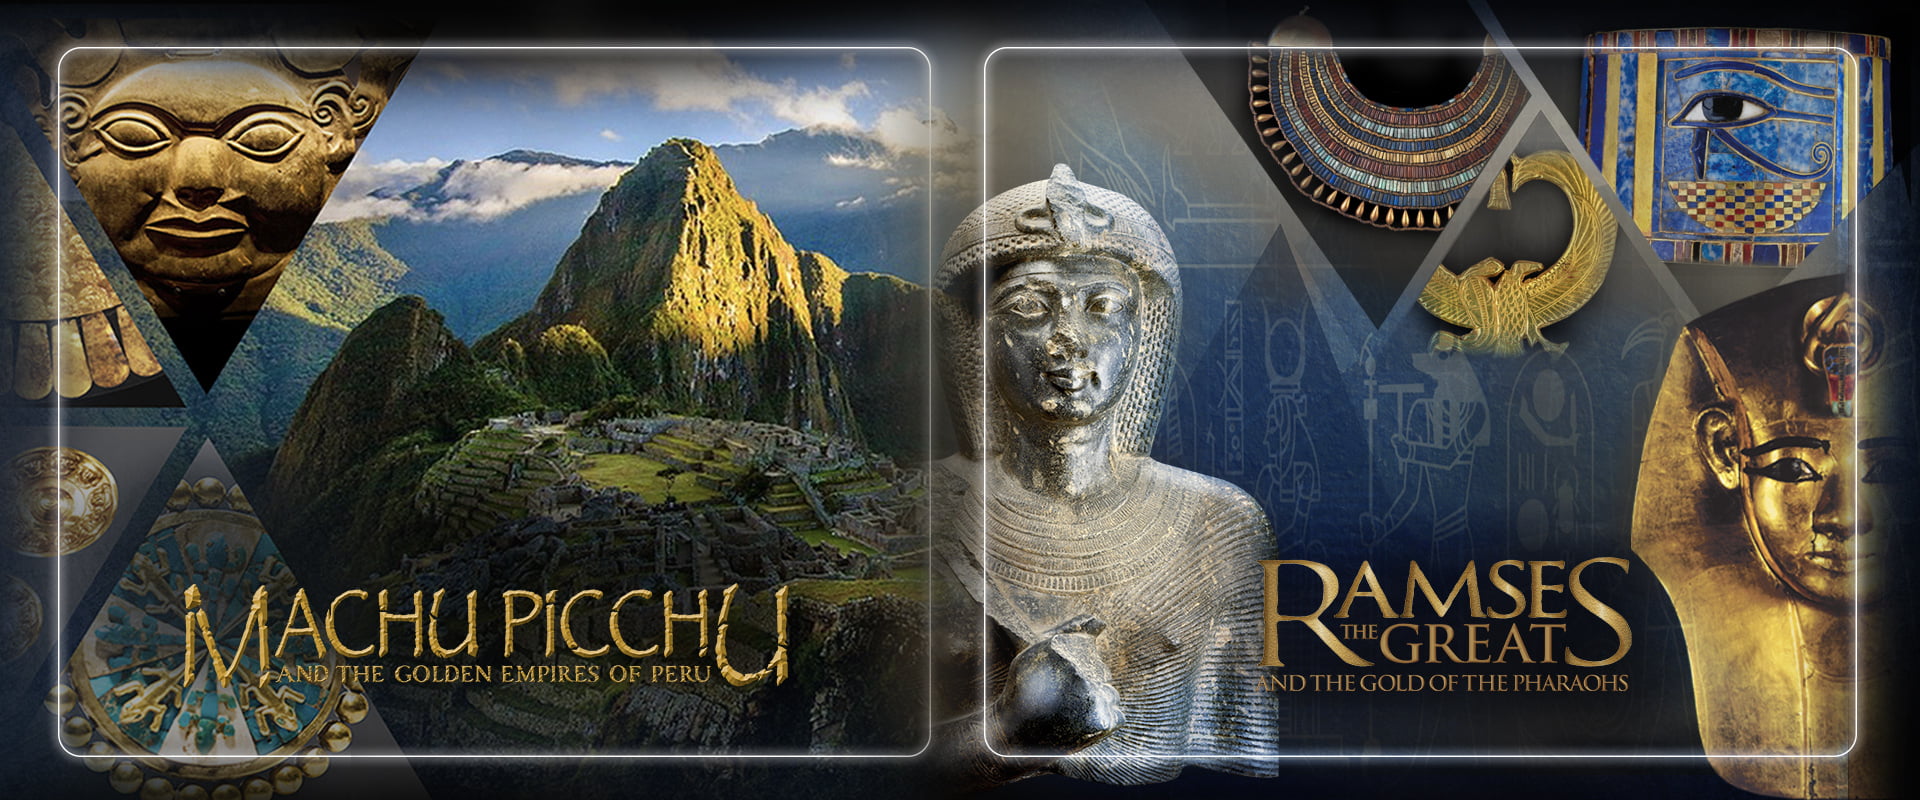 Machu Picchu and Ramses the Great Cityneon